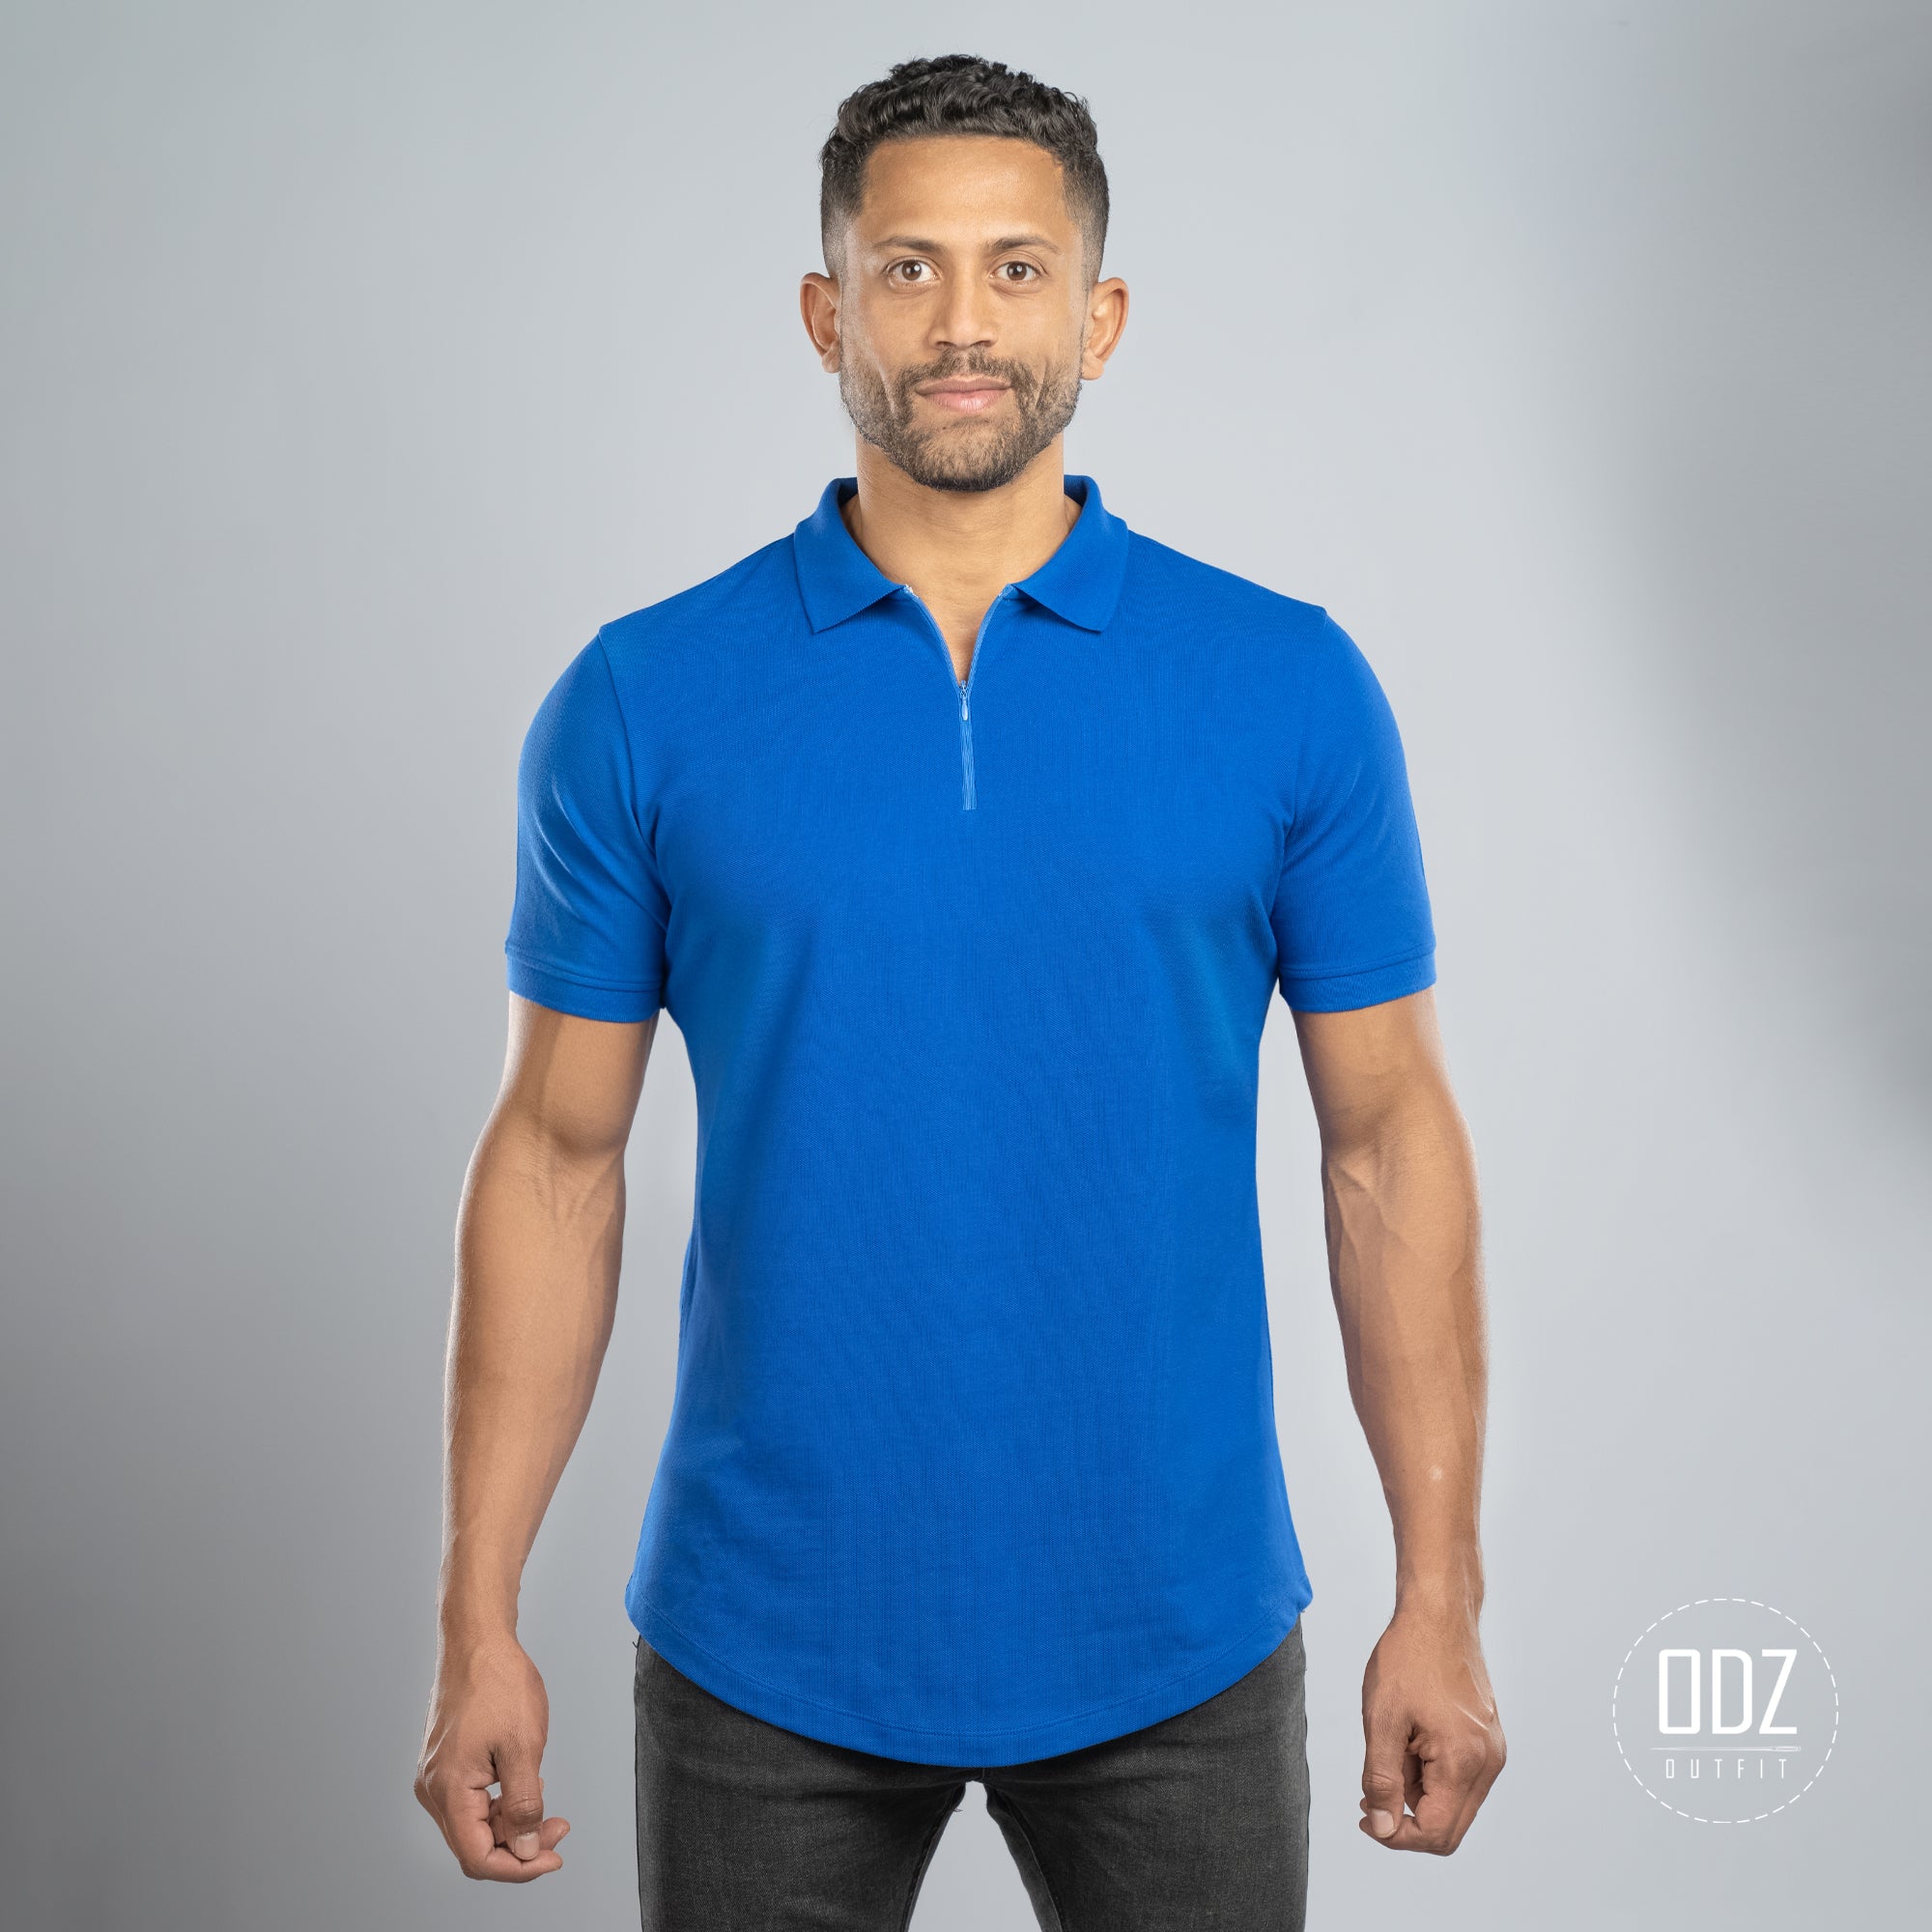 Pepsi Blue Curved Zipper Polo T-shirt